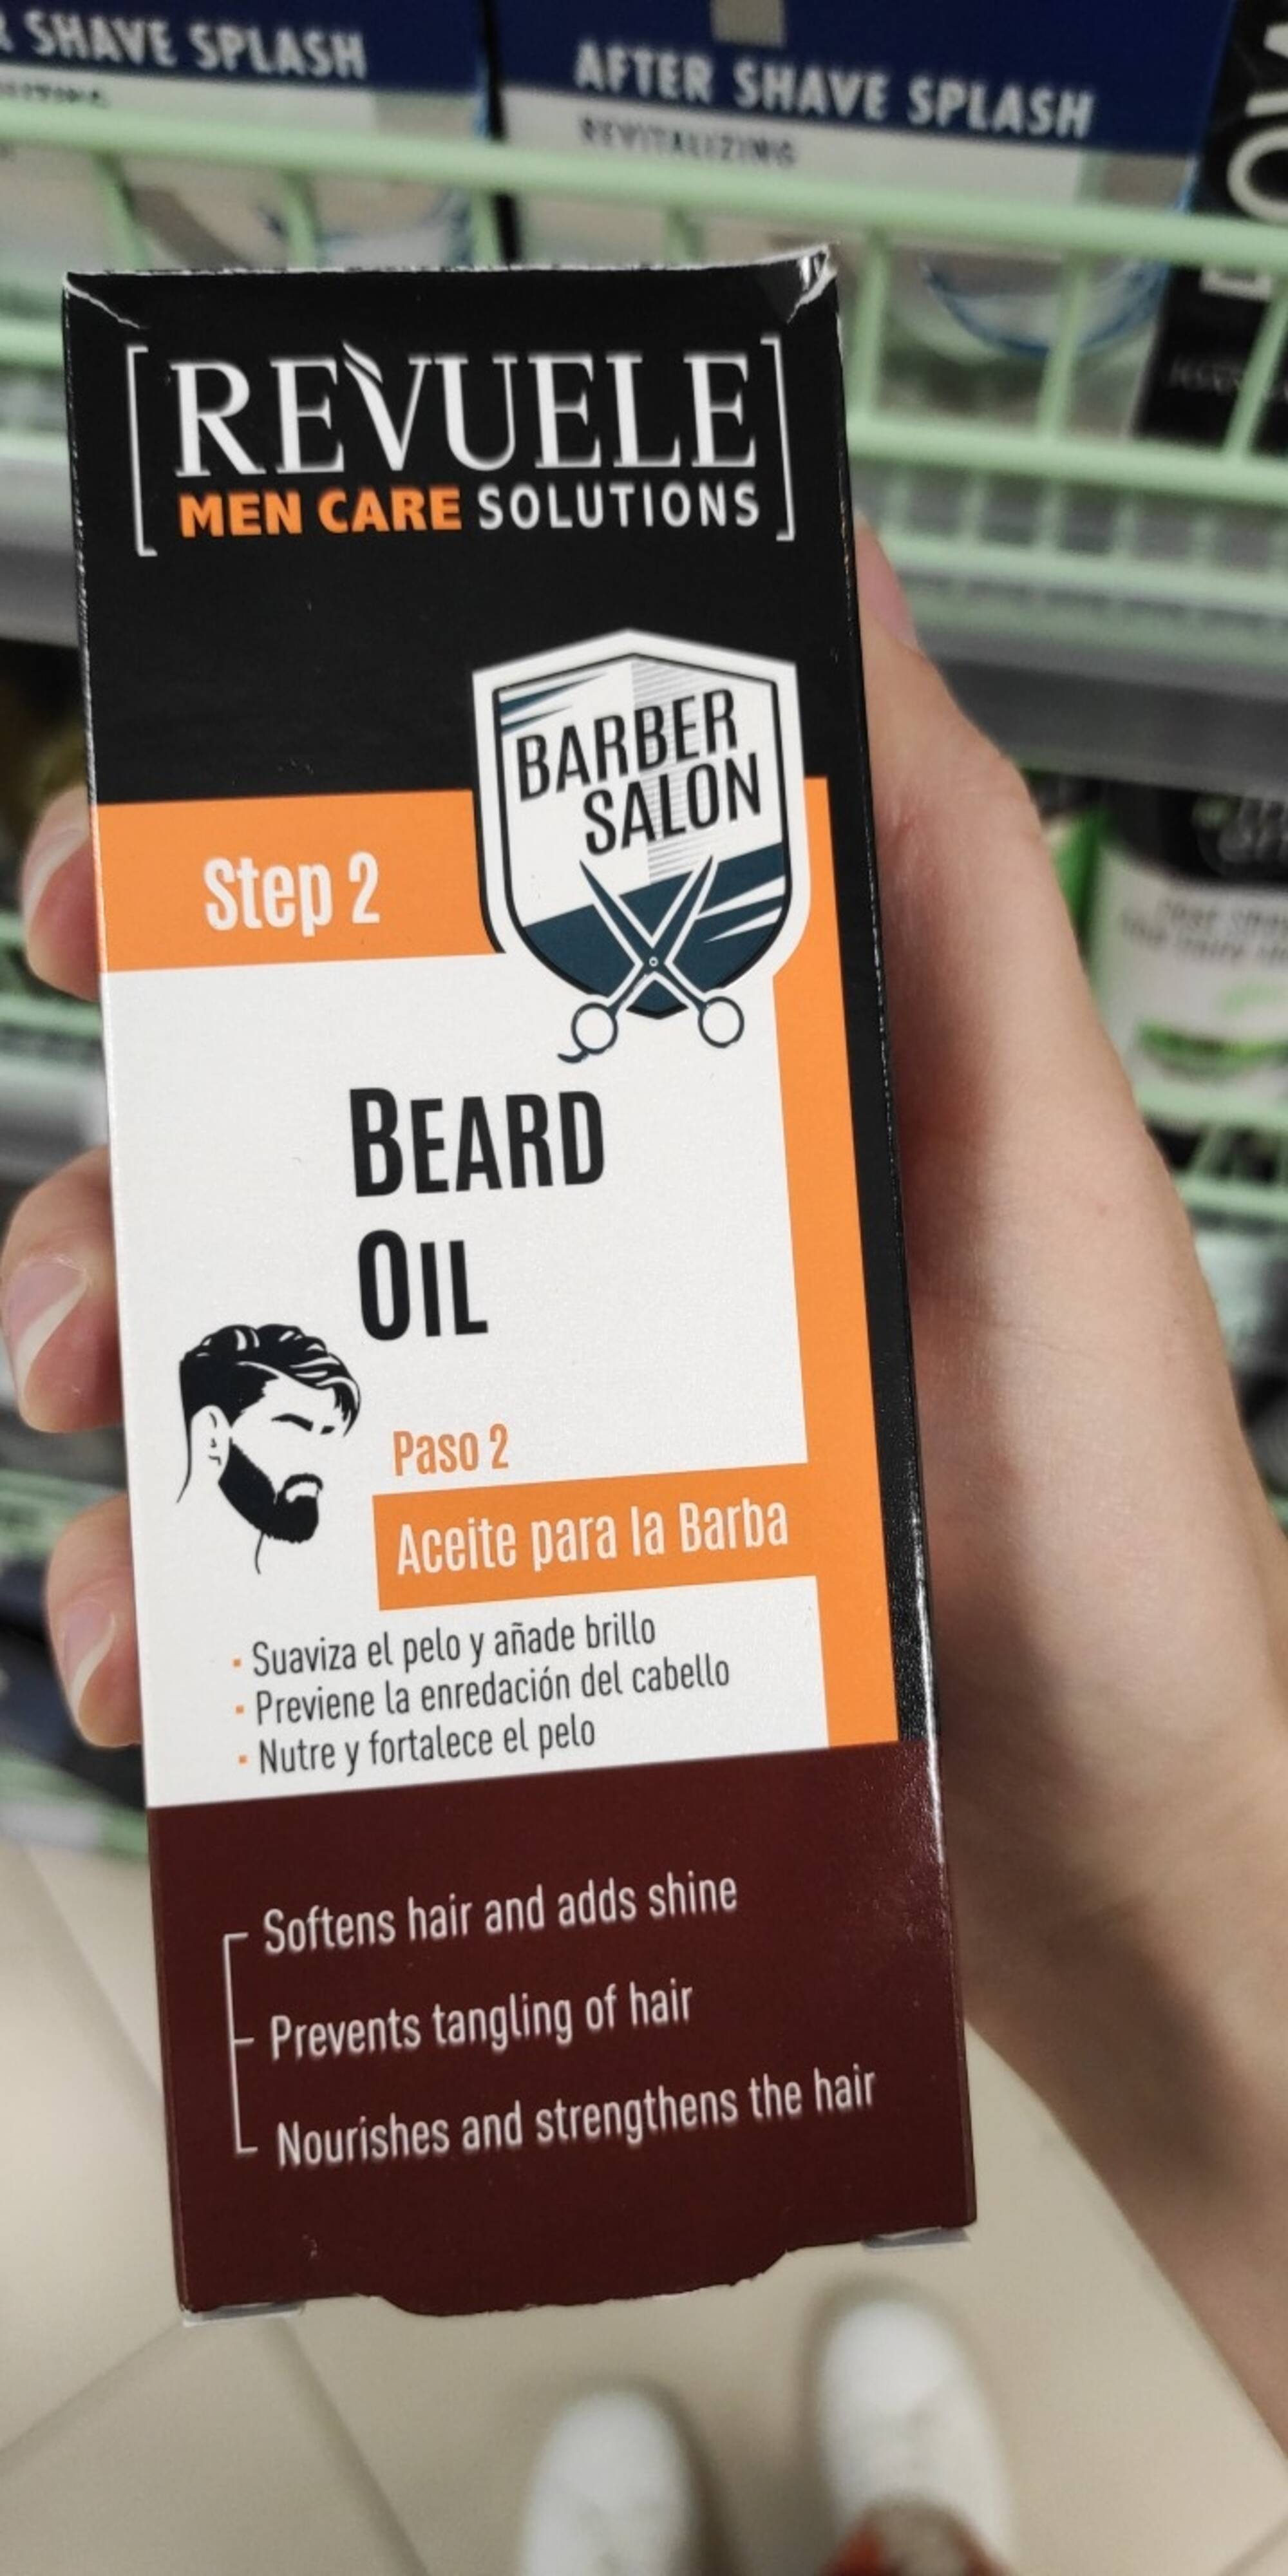 REVUELE - Men care solutions - Beard oil